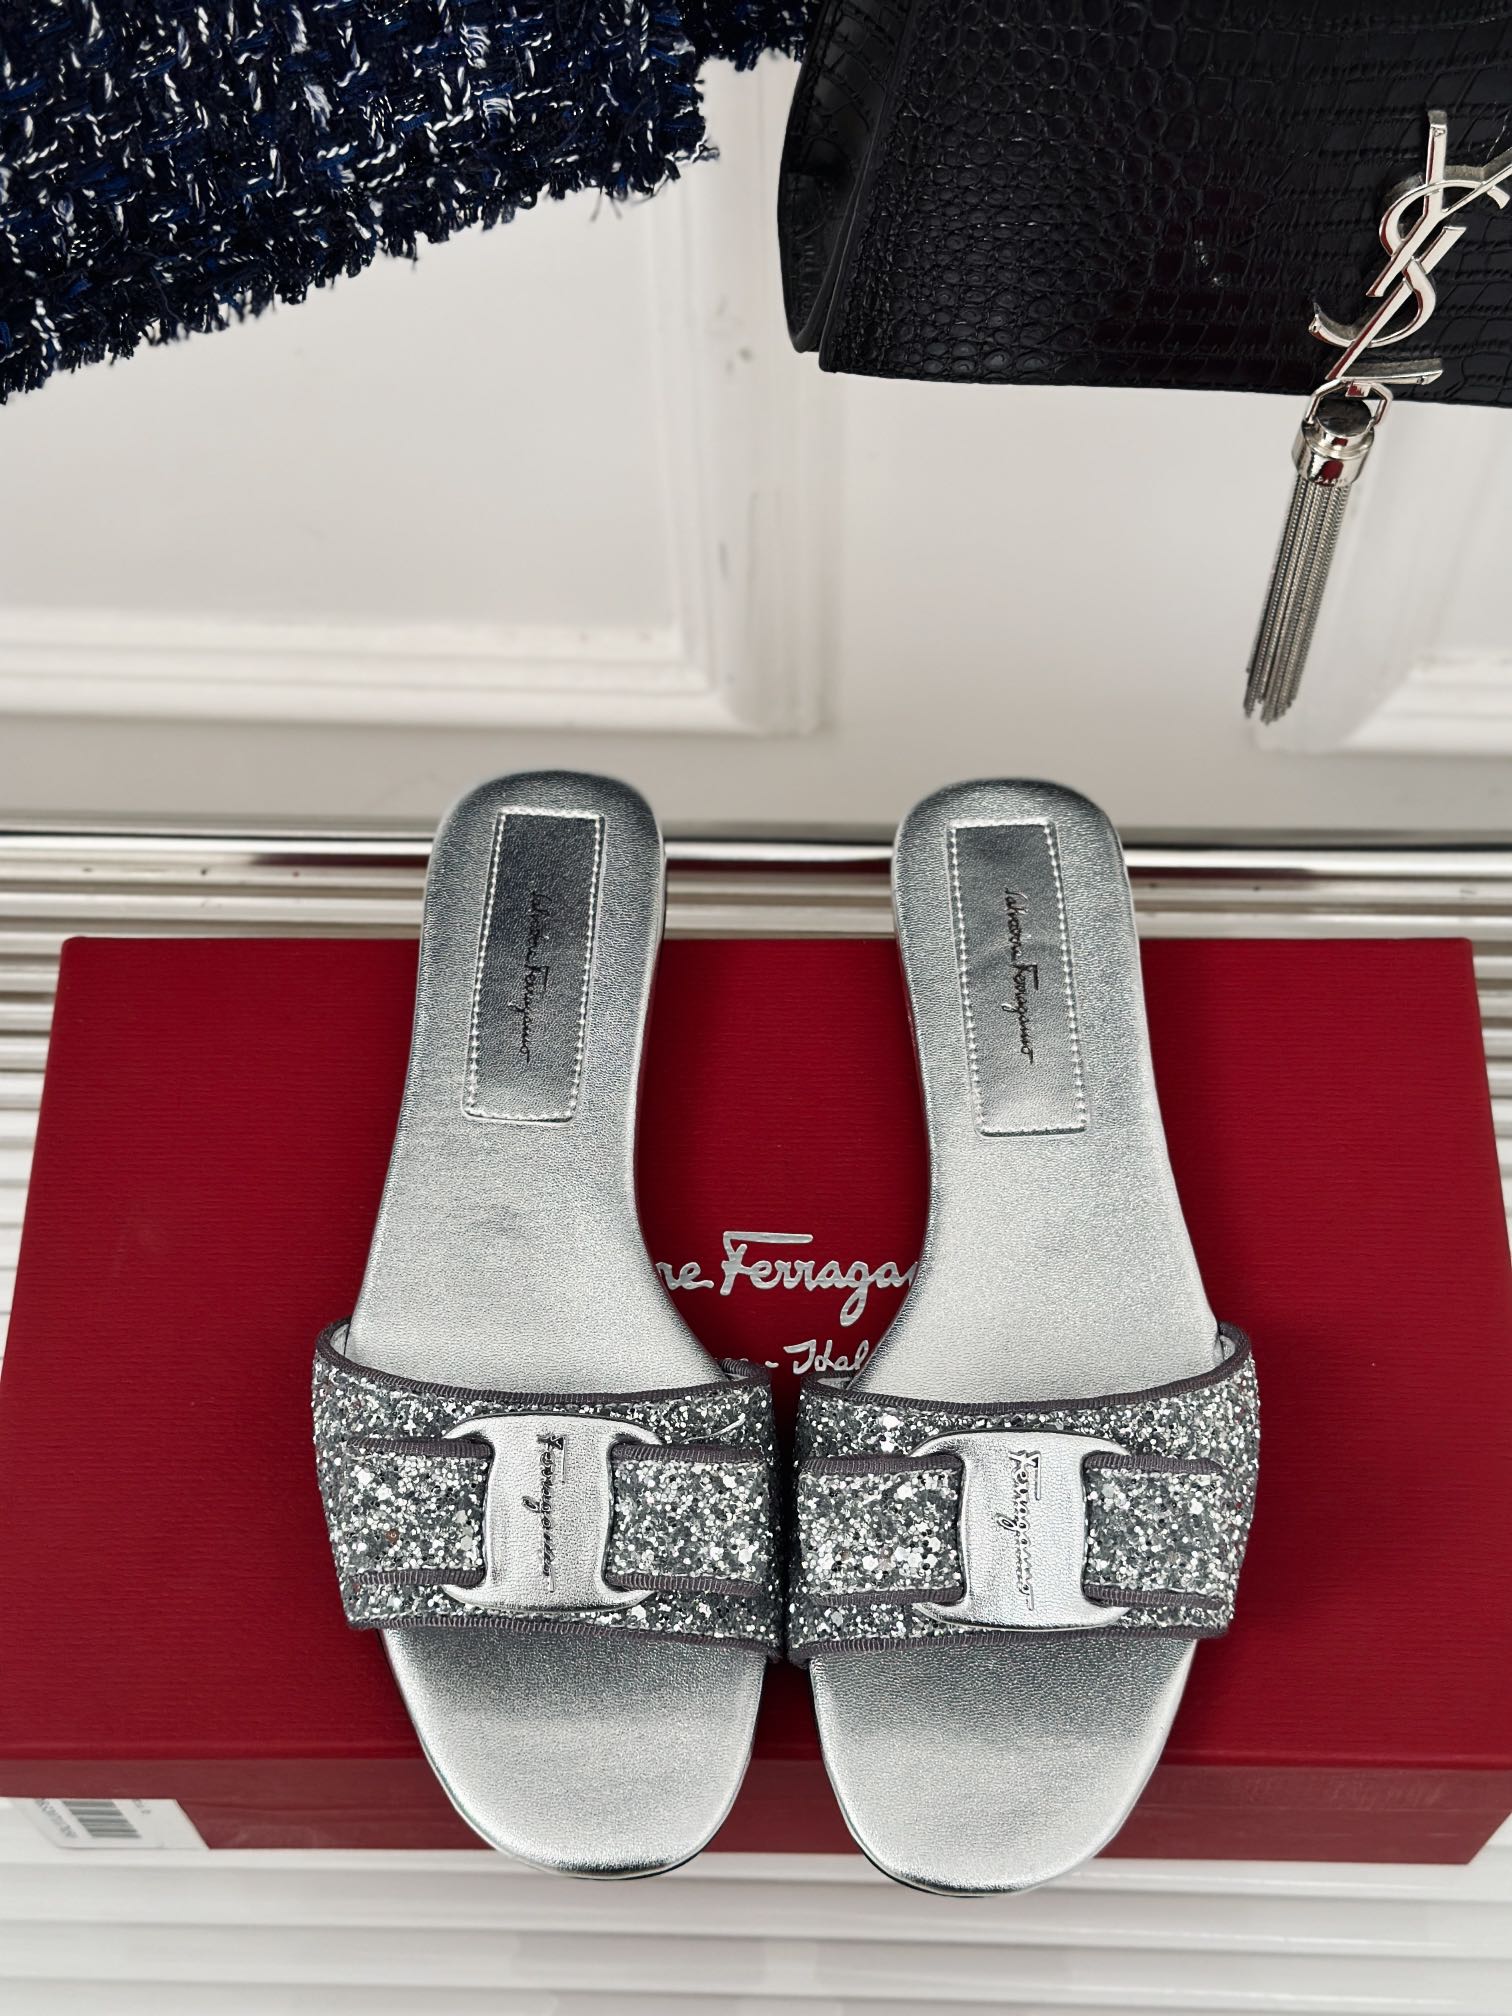 Ferragamo/菲拉格慕经典夏季蝴蝶结拖鞋！这款拖鞋实在太美了奢华又低调彰显气质和品味面料采用进口胎